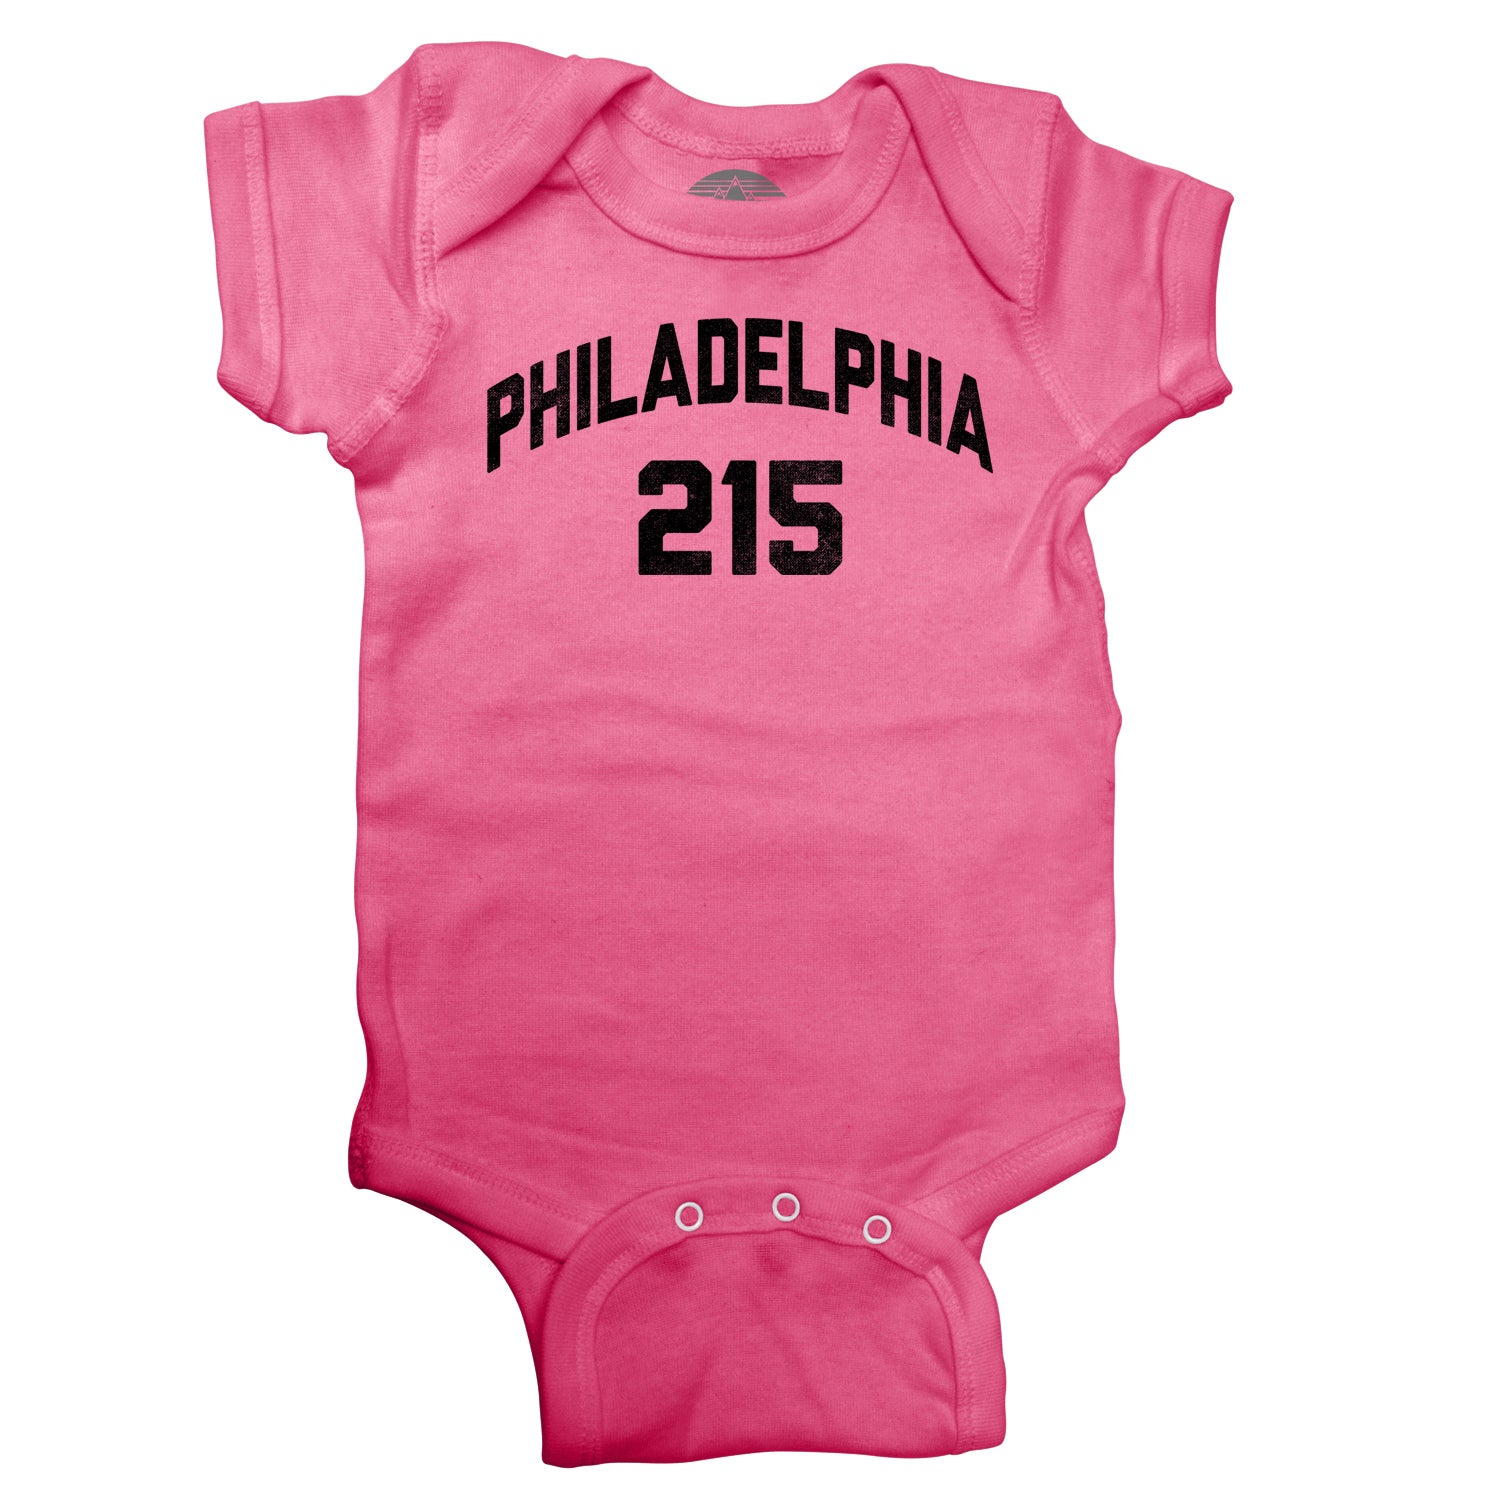 Philadelphia 215 Area Code Infant Bodysuit - Unisex Fit